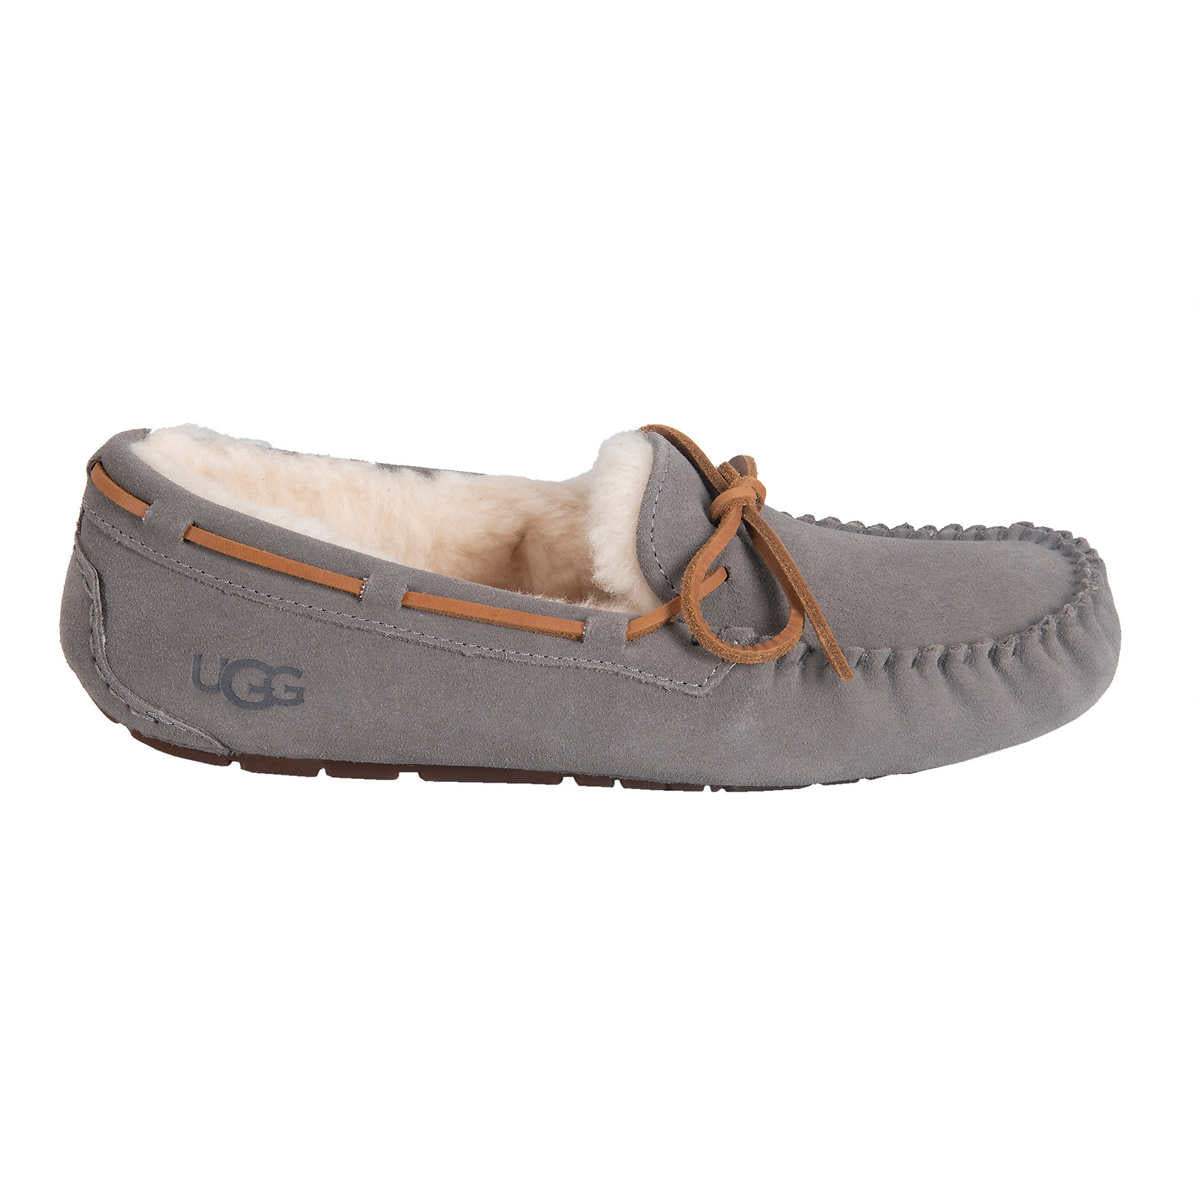 ugg-pantoufles-dakota-femme-women's-slippers-2